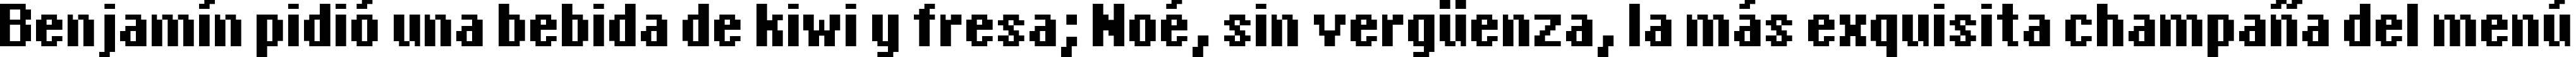 Пример написания шрифтом copy 08_65 текста на испанском